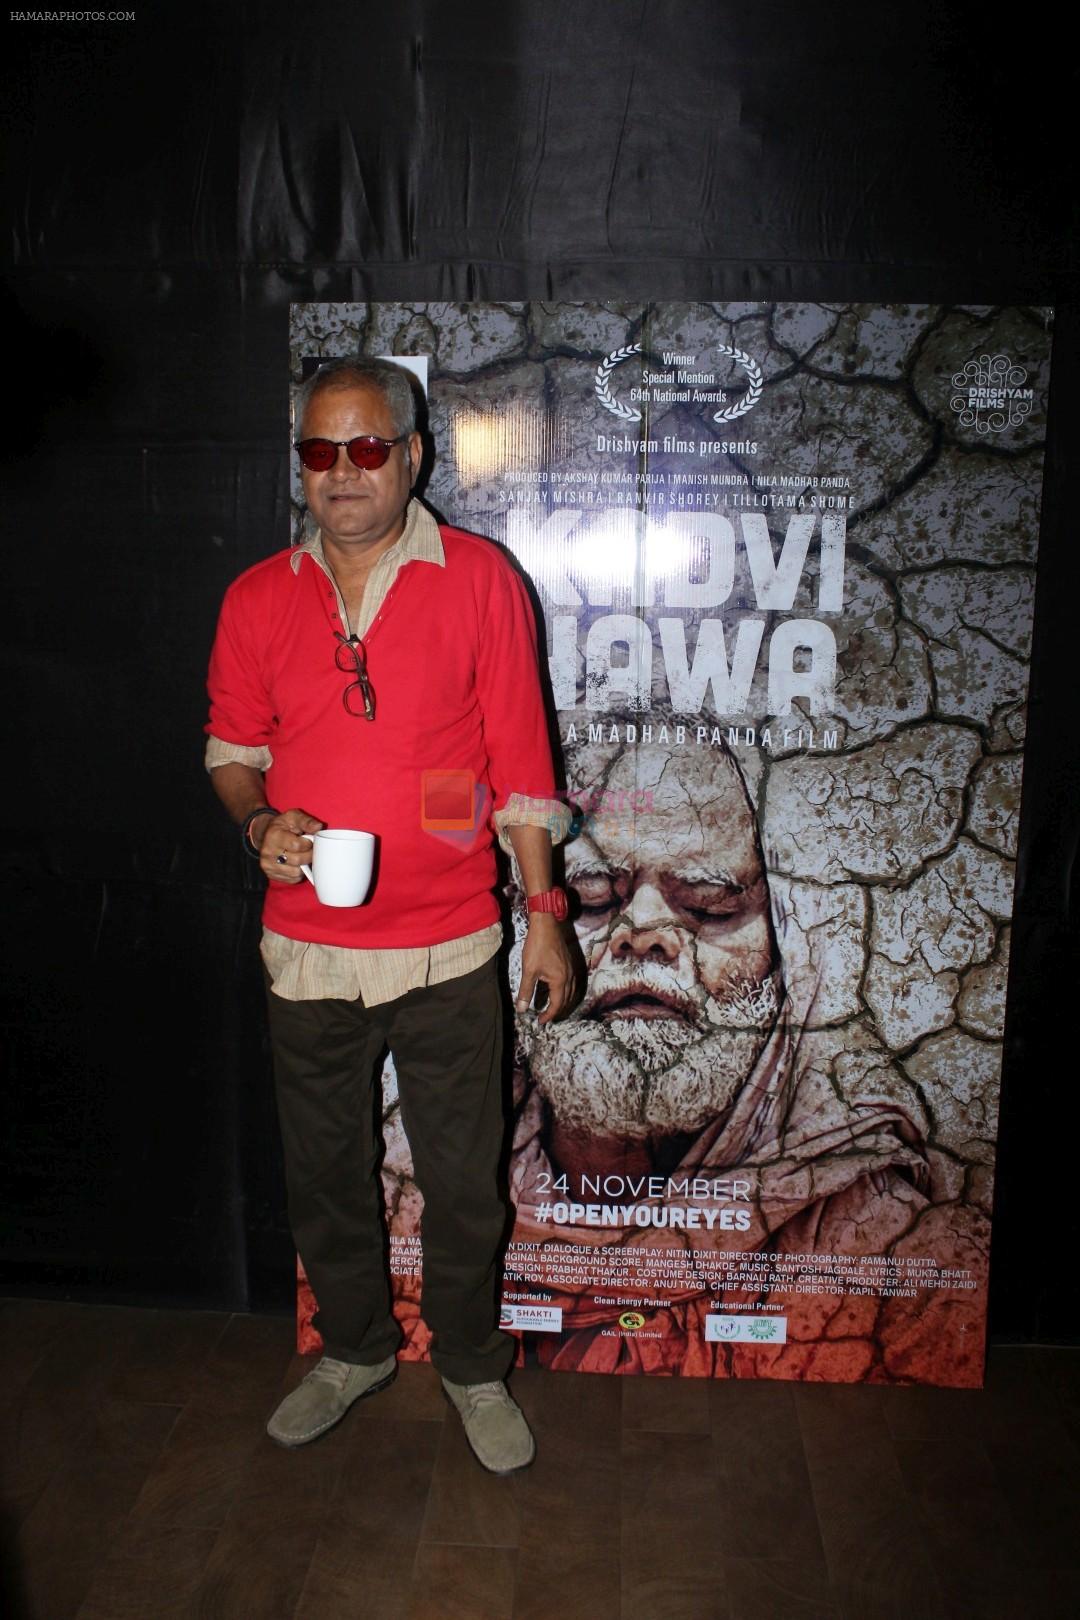 Sanjay Misra at the Screening Of Kadvi Hawa on 23rd Nov 2017